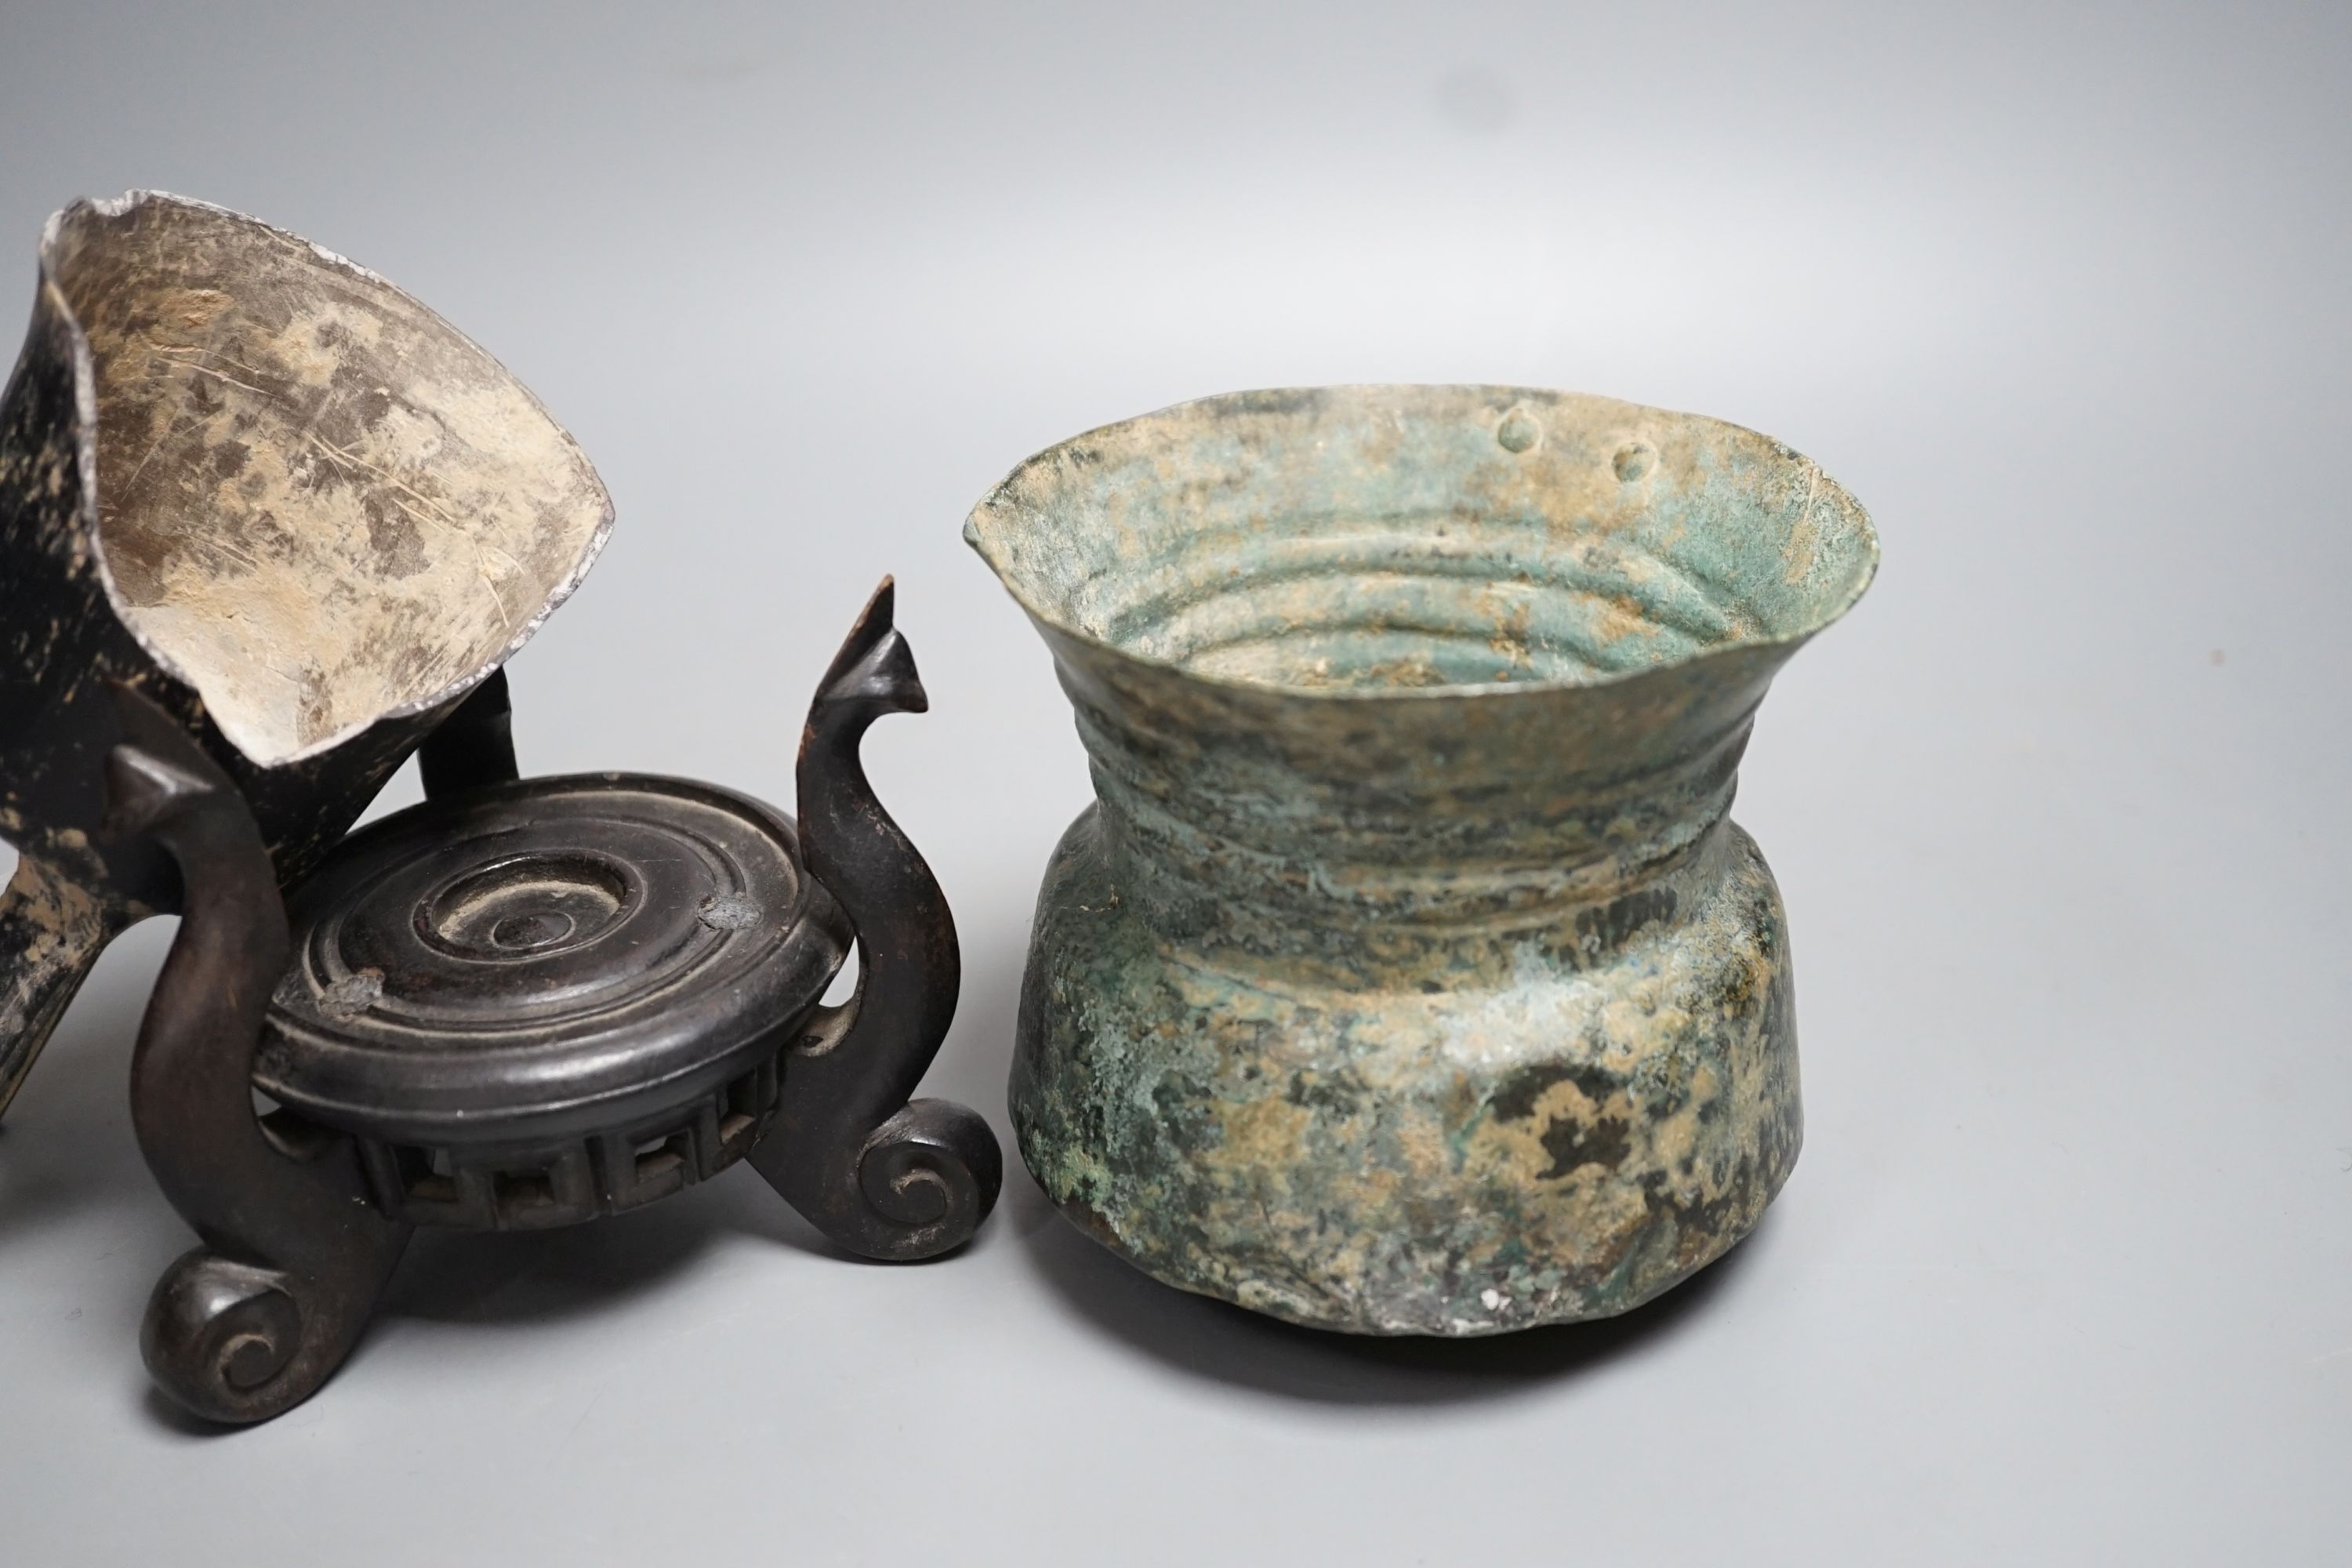 A Han dynasty pottery tripod vessel and a Roman jug